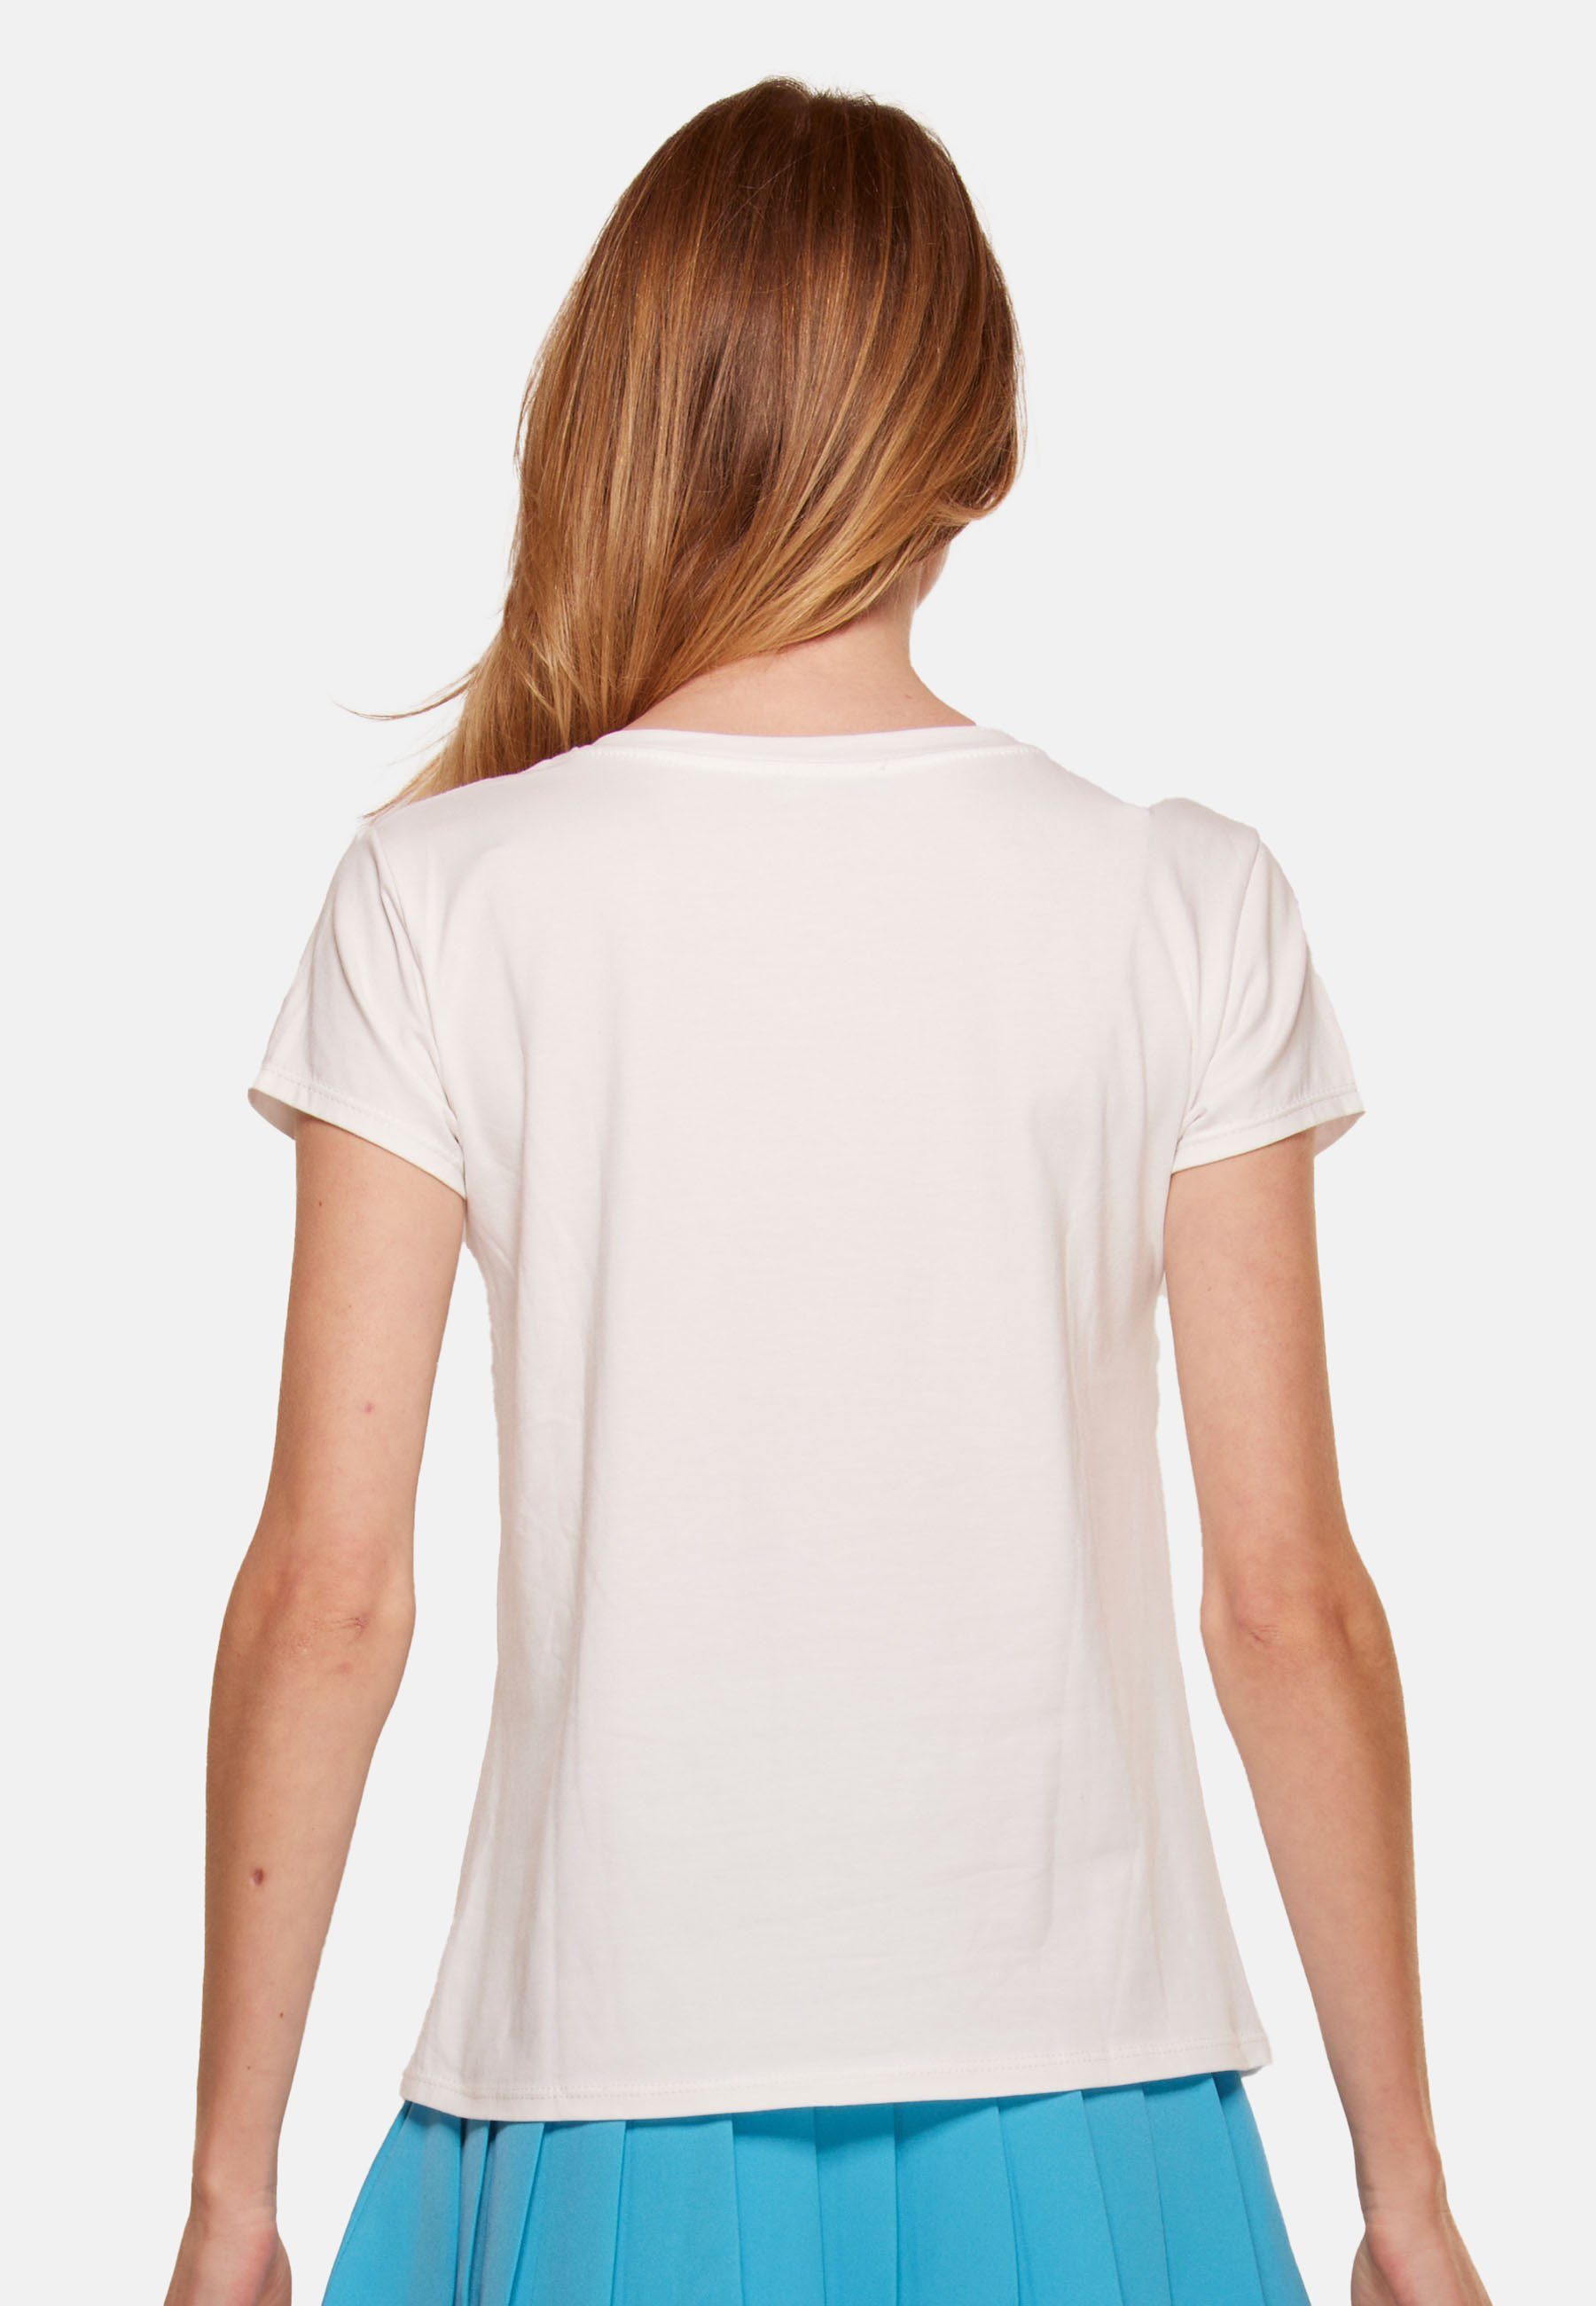 Stylish Print-Shirt T-shirt Tooche